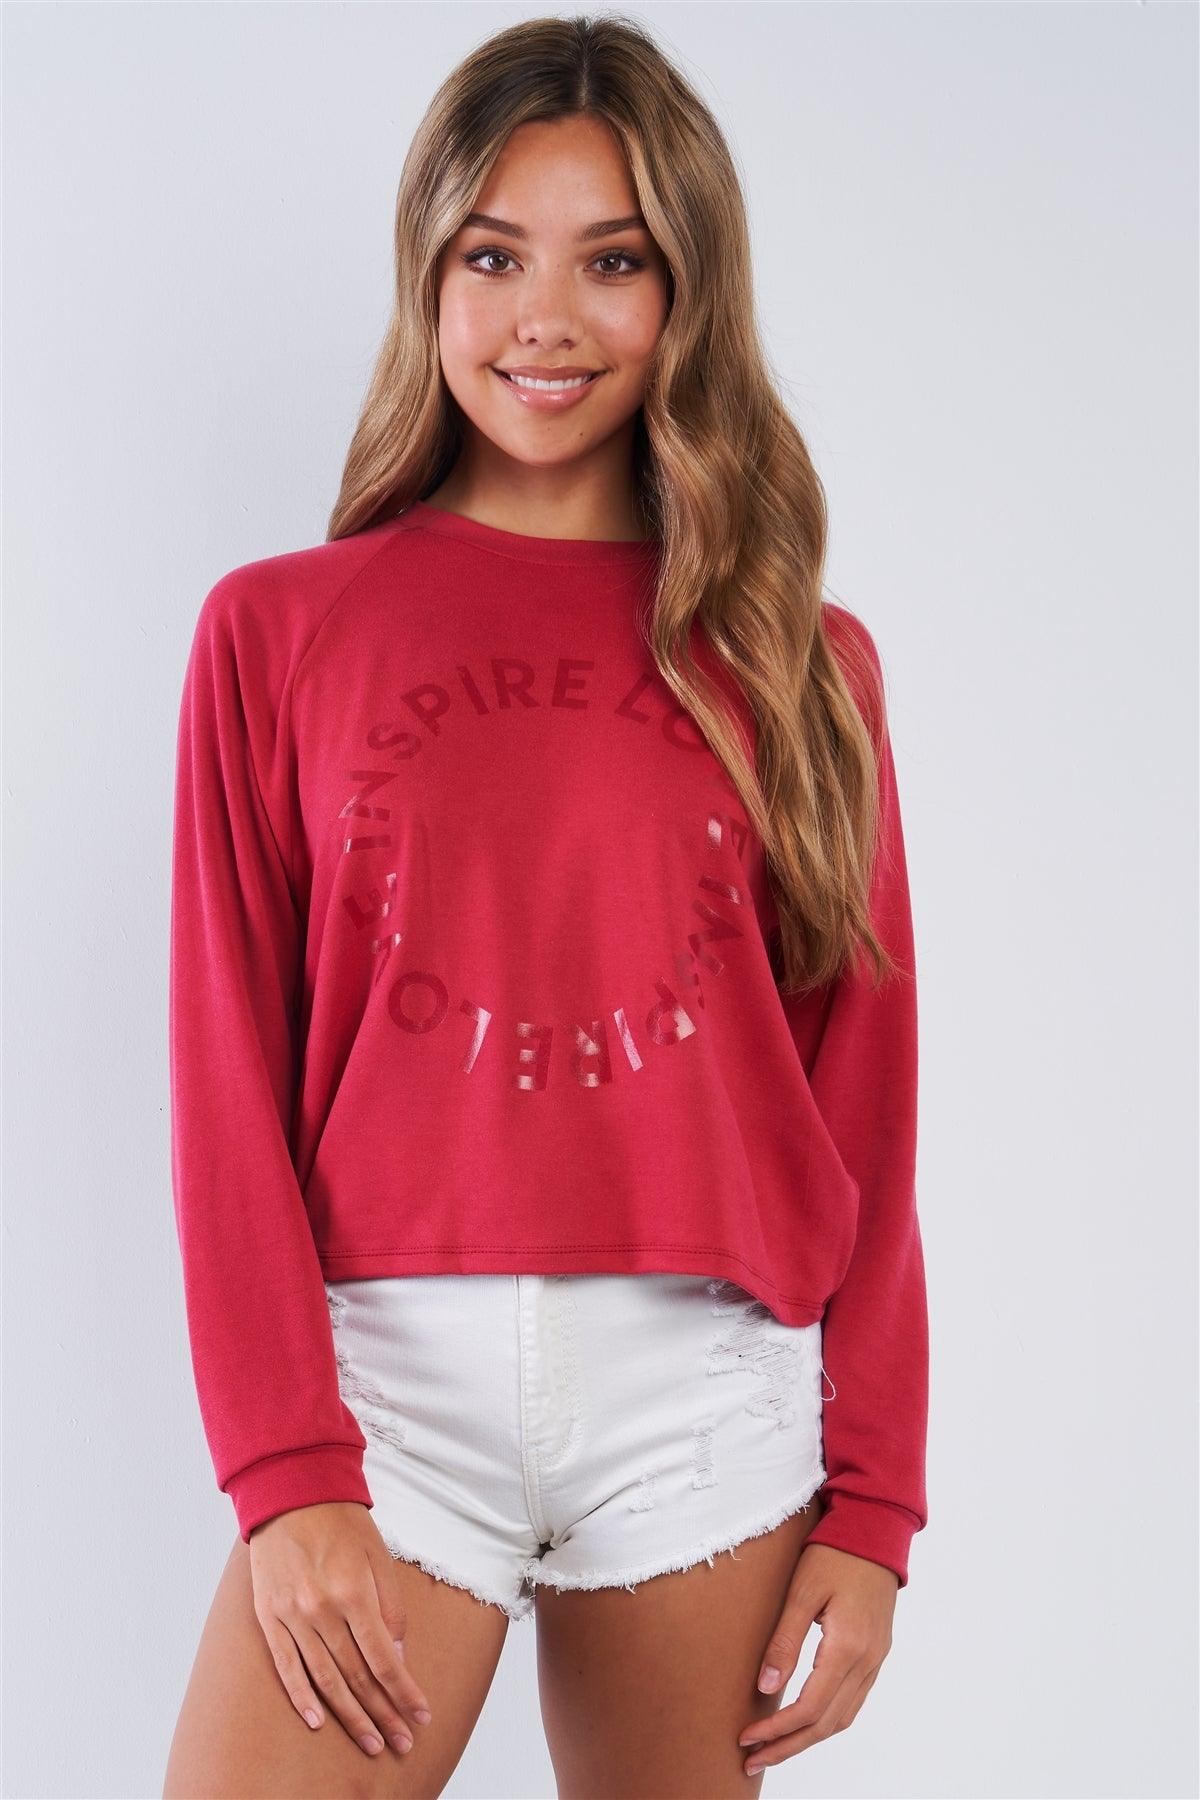 "Inspire Love" Graphic Print Crew Neck Fleece Sweater